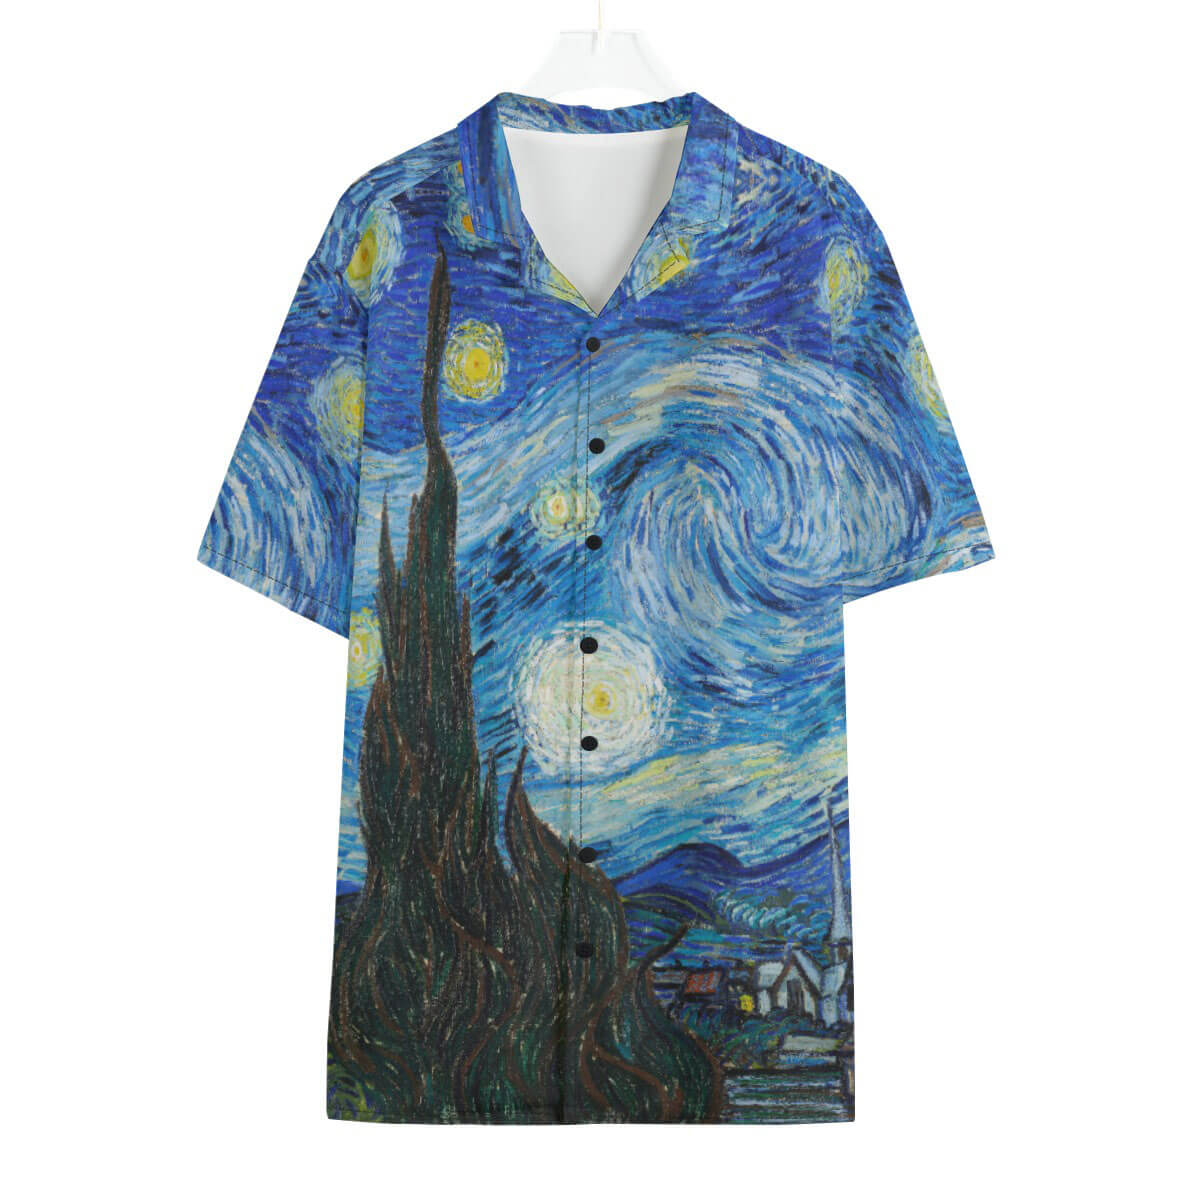 The Starry Night by Van Gogh Hawaiian Shirt on model at beach sunset